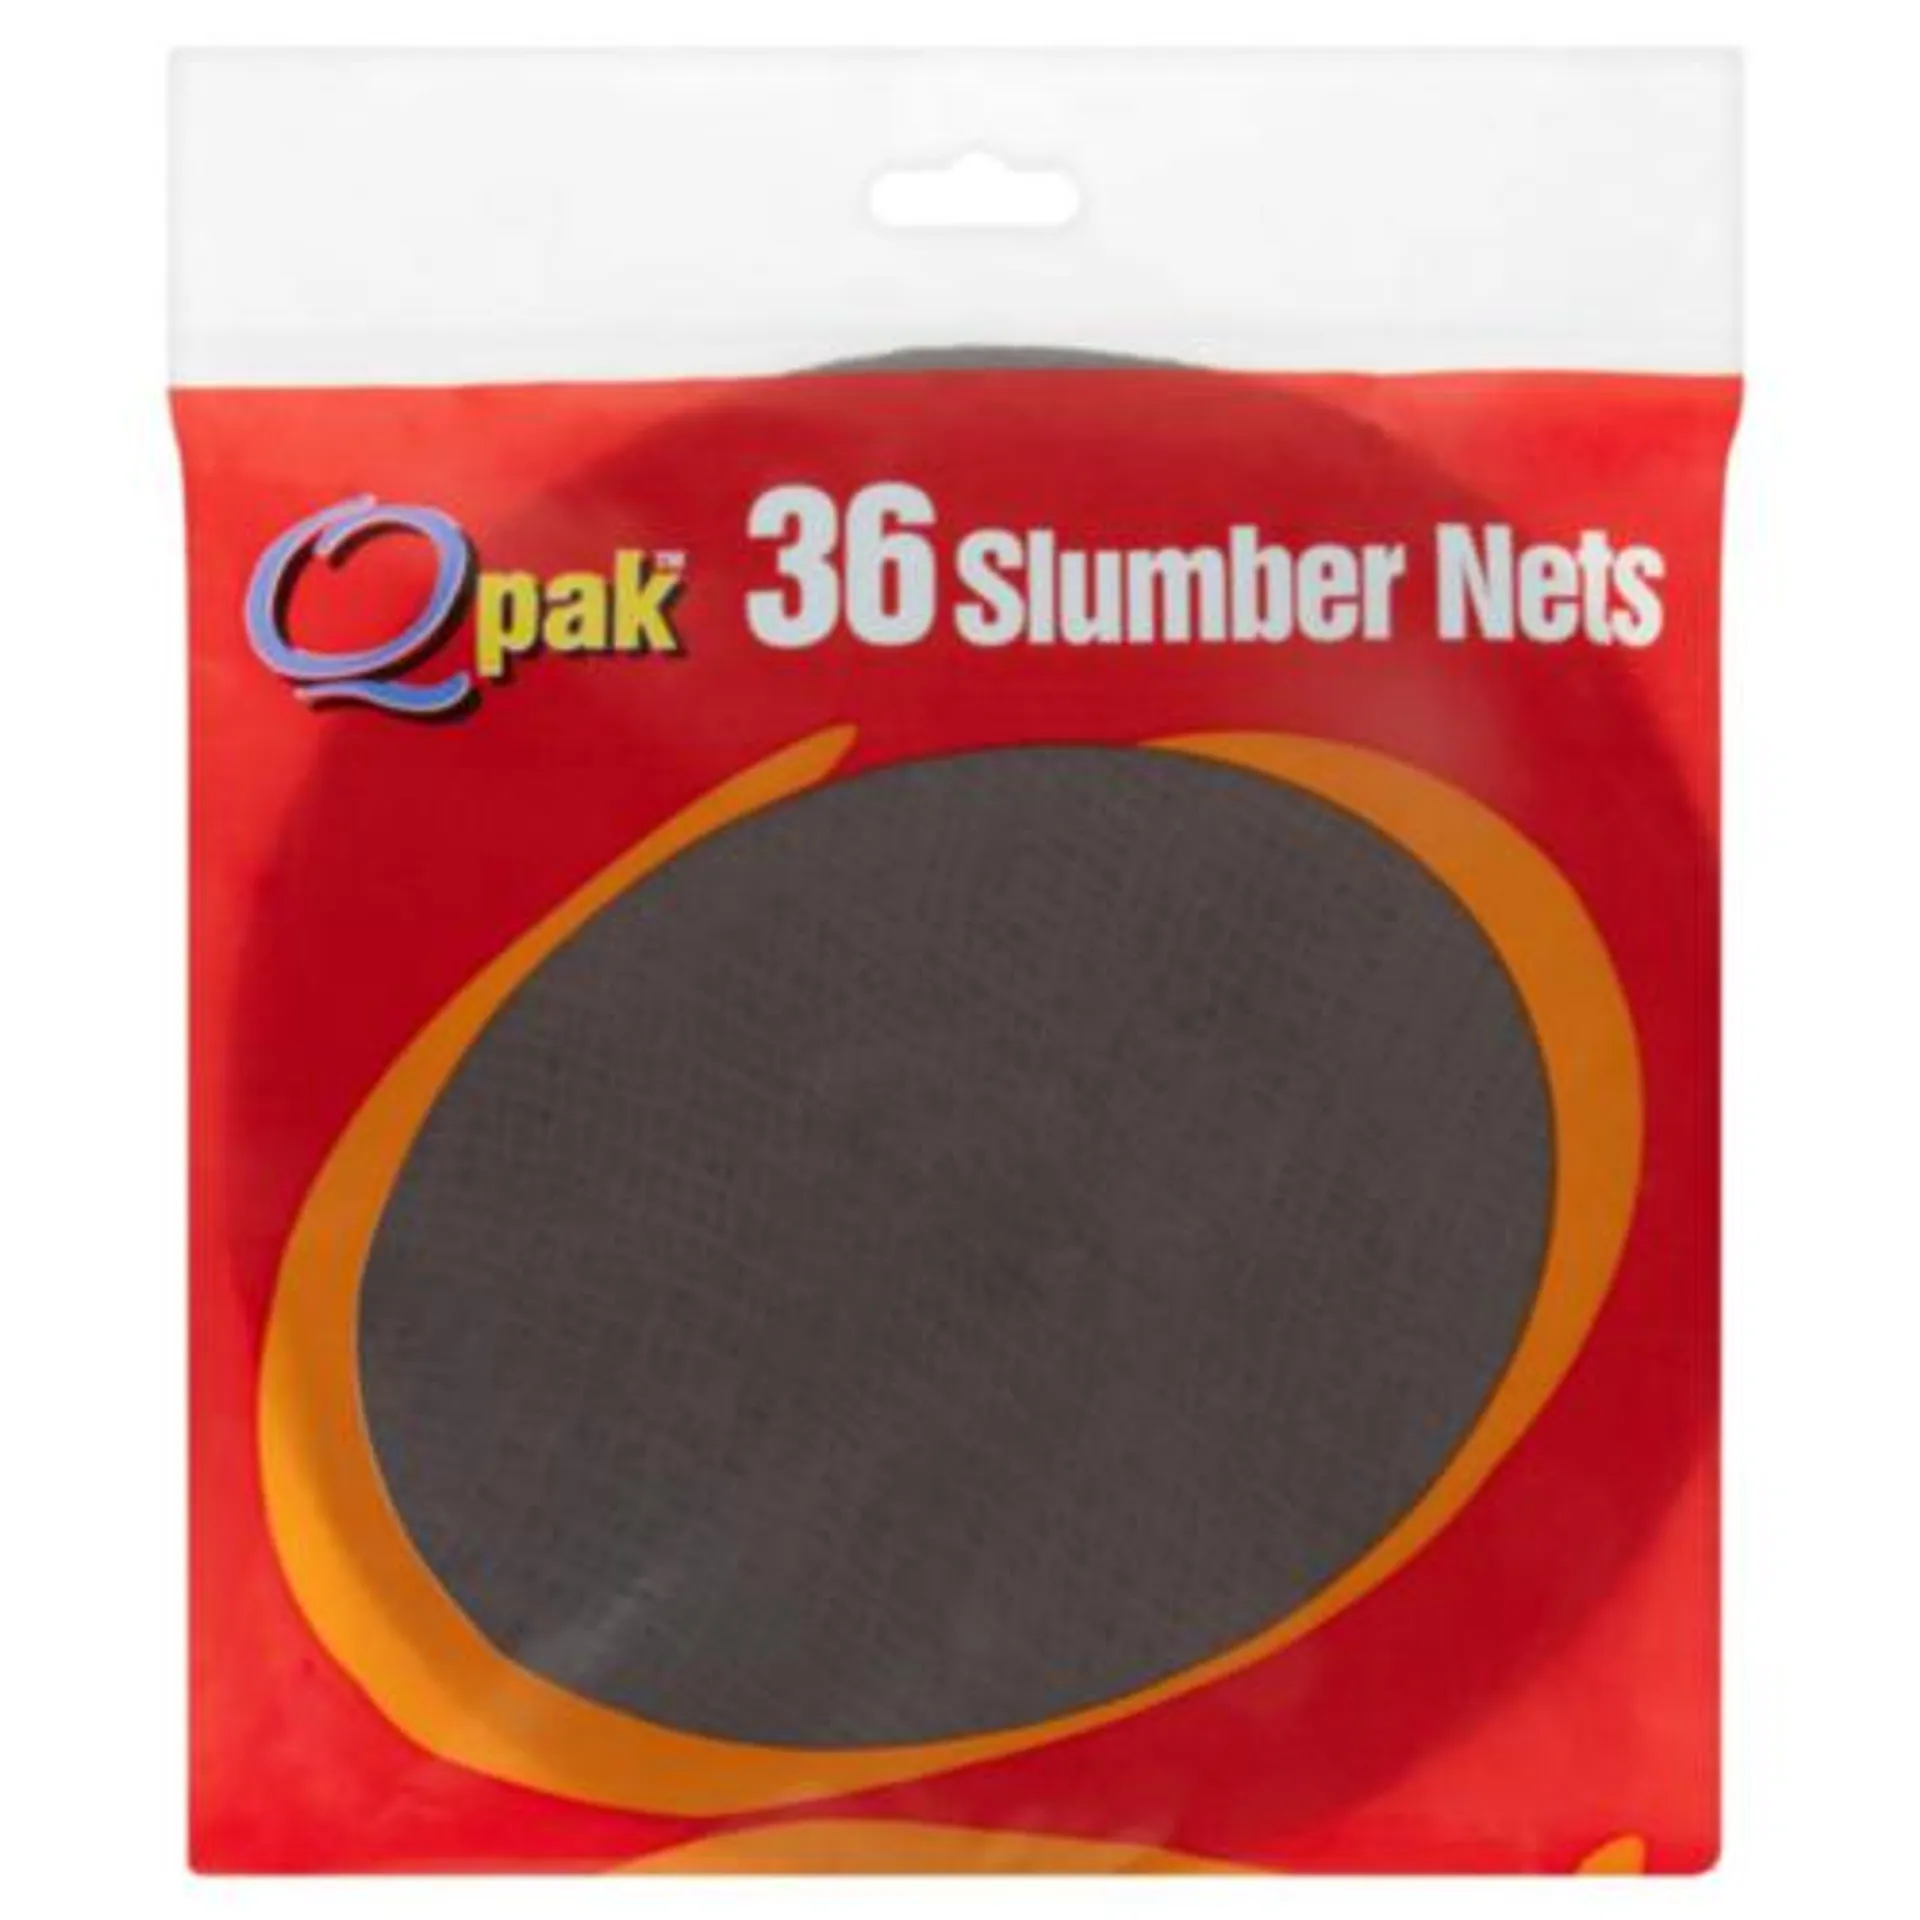 Qpak Slumber Hair Nets 36 Pack